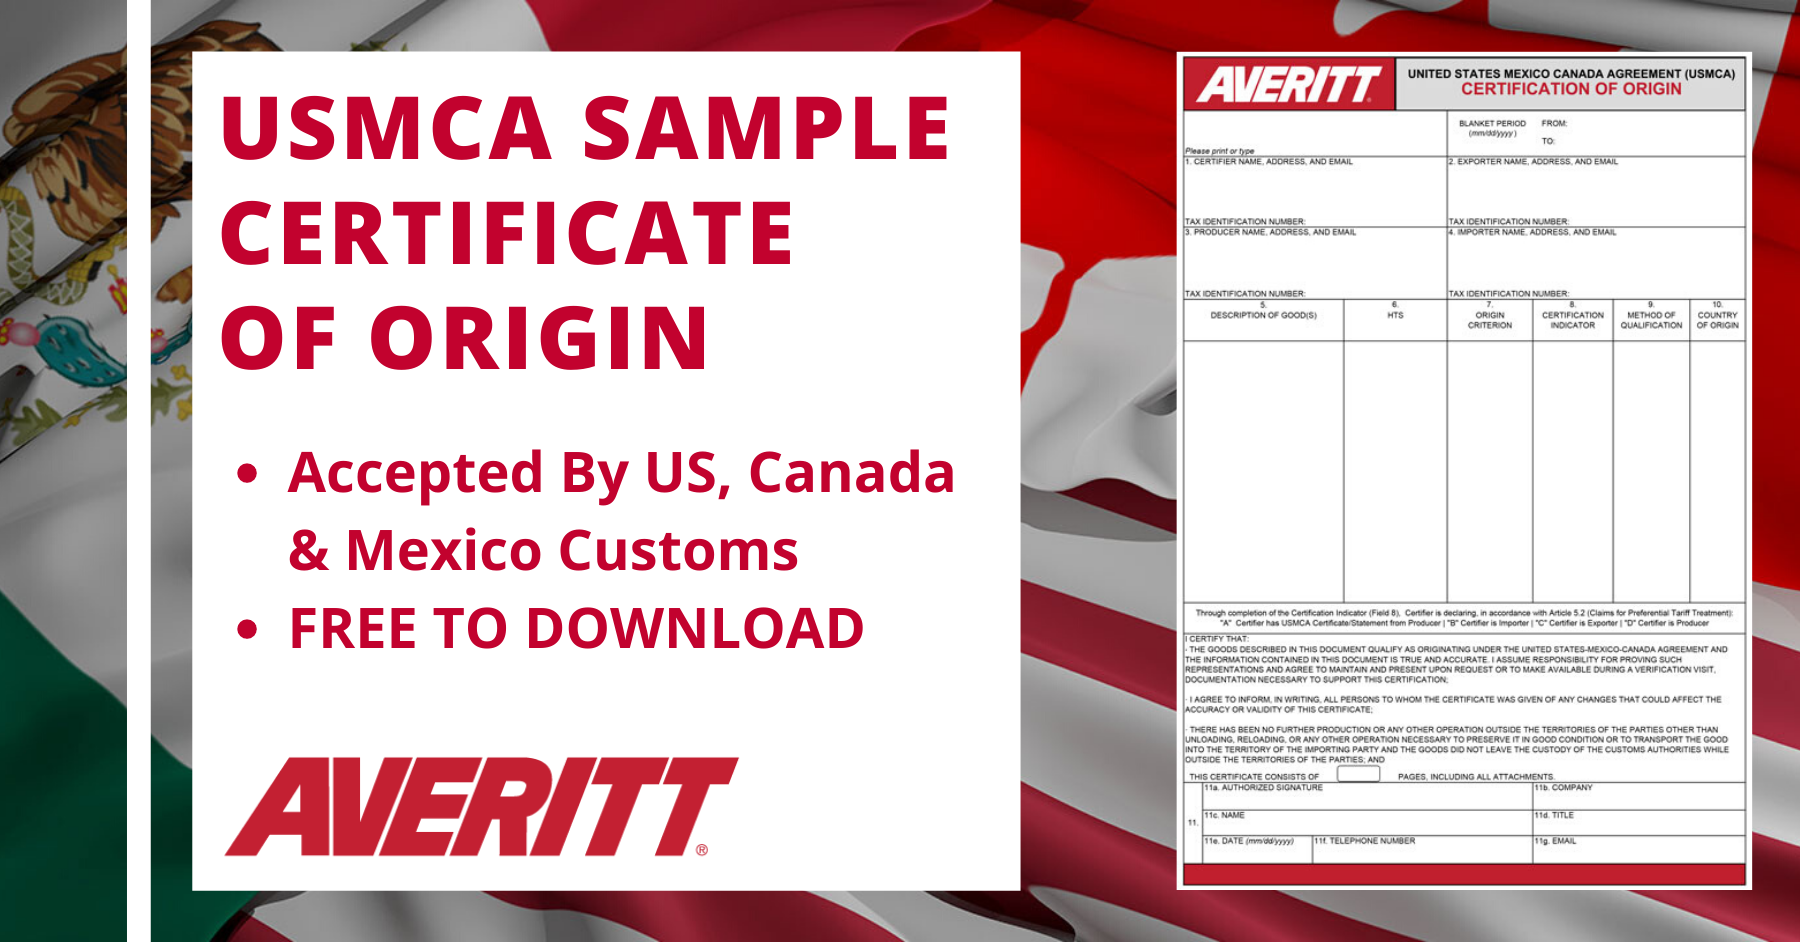 download-a-free-usmca-certificate-of-origin-document-p2p